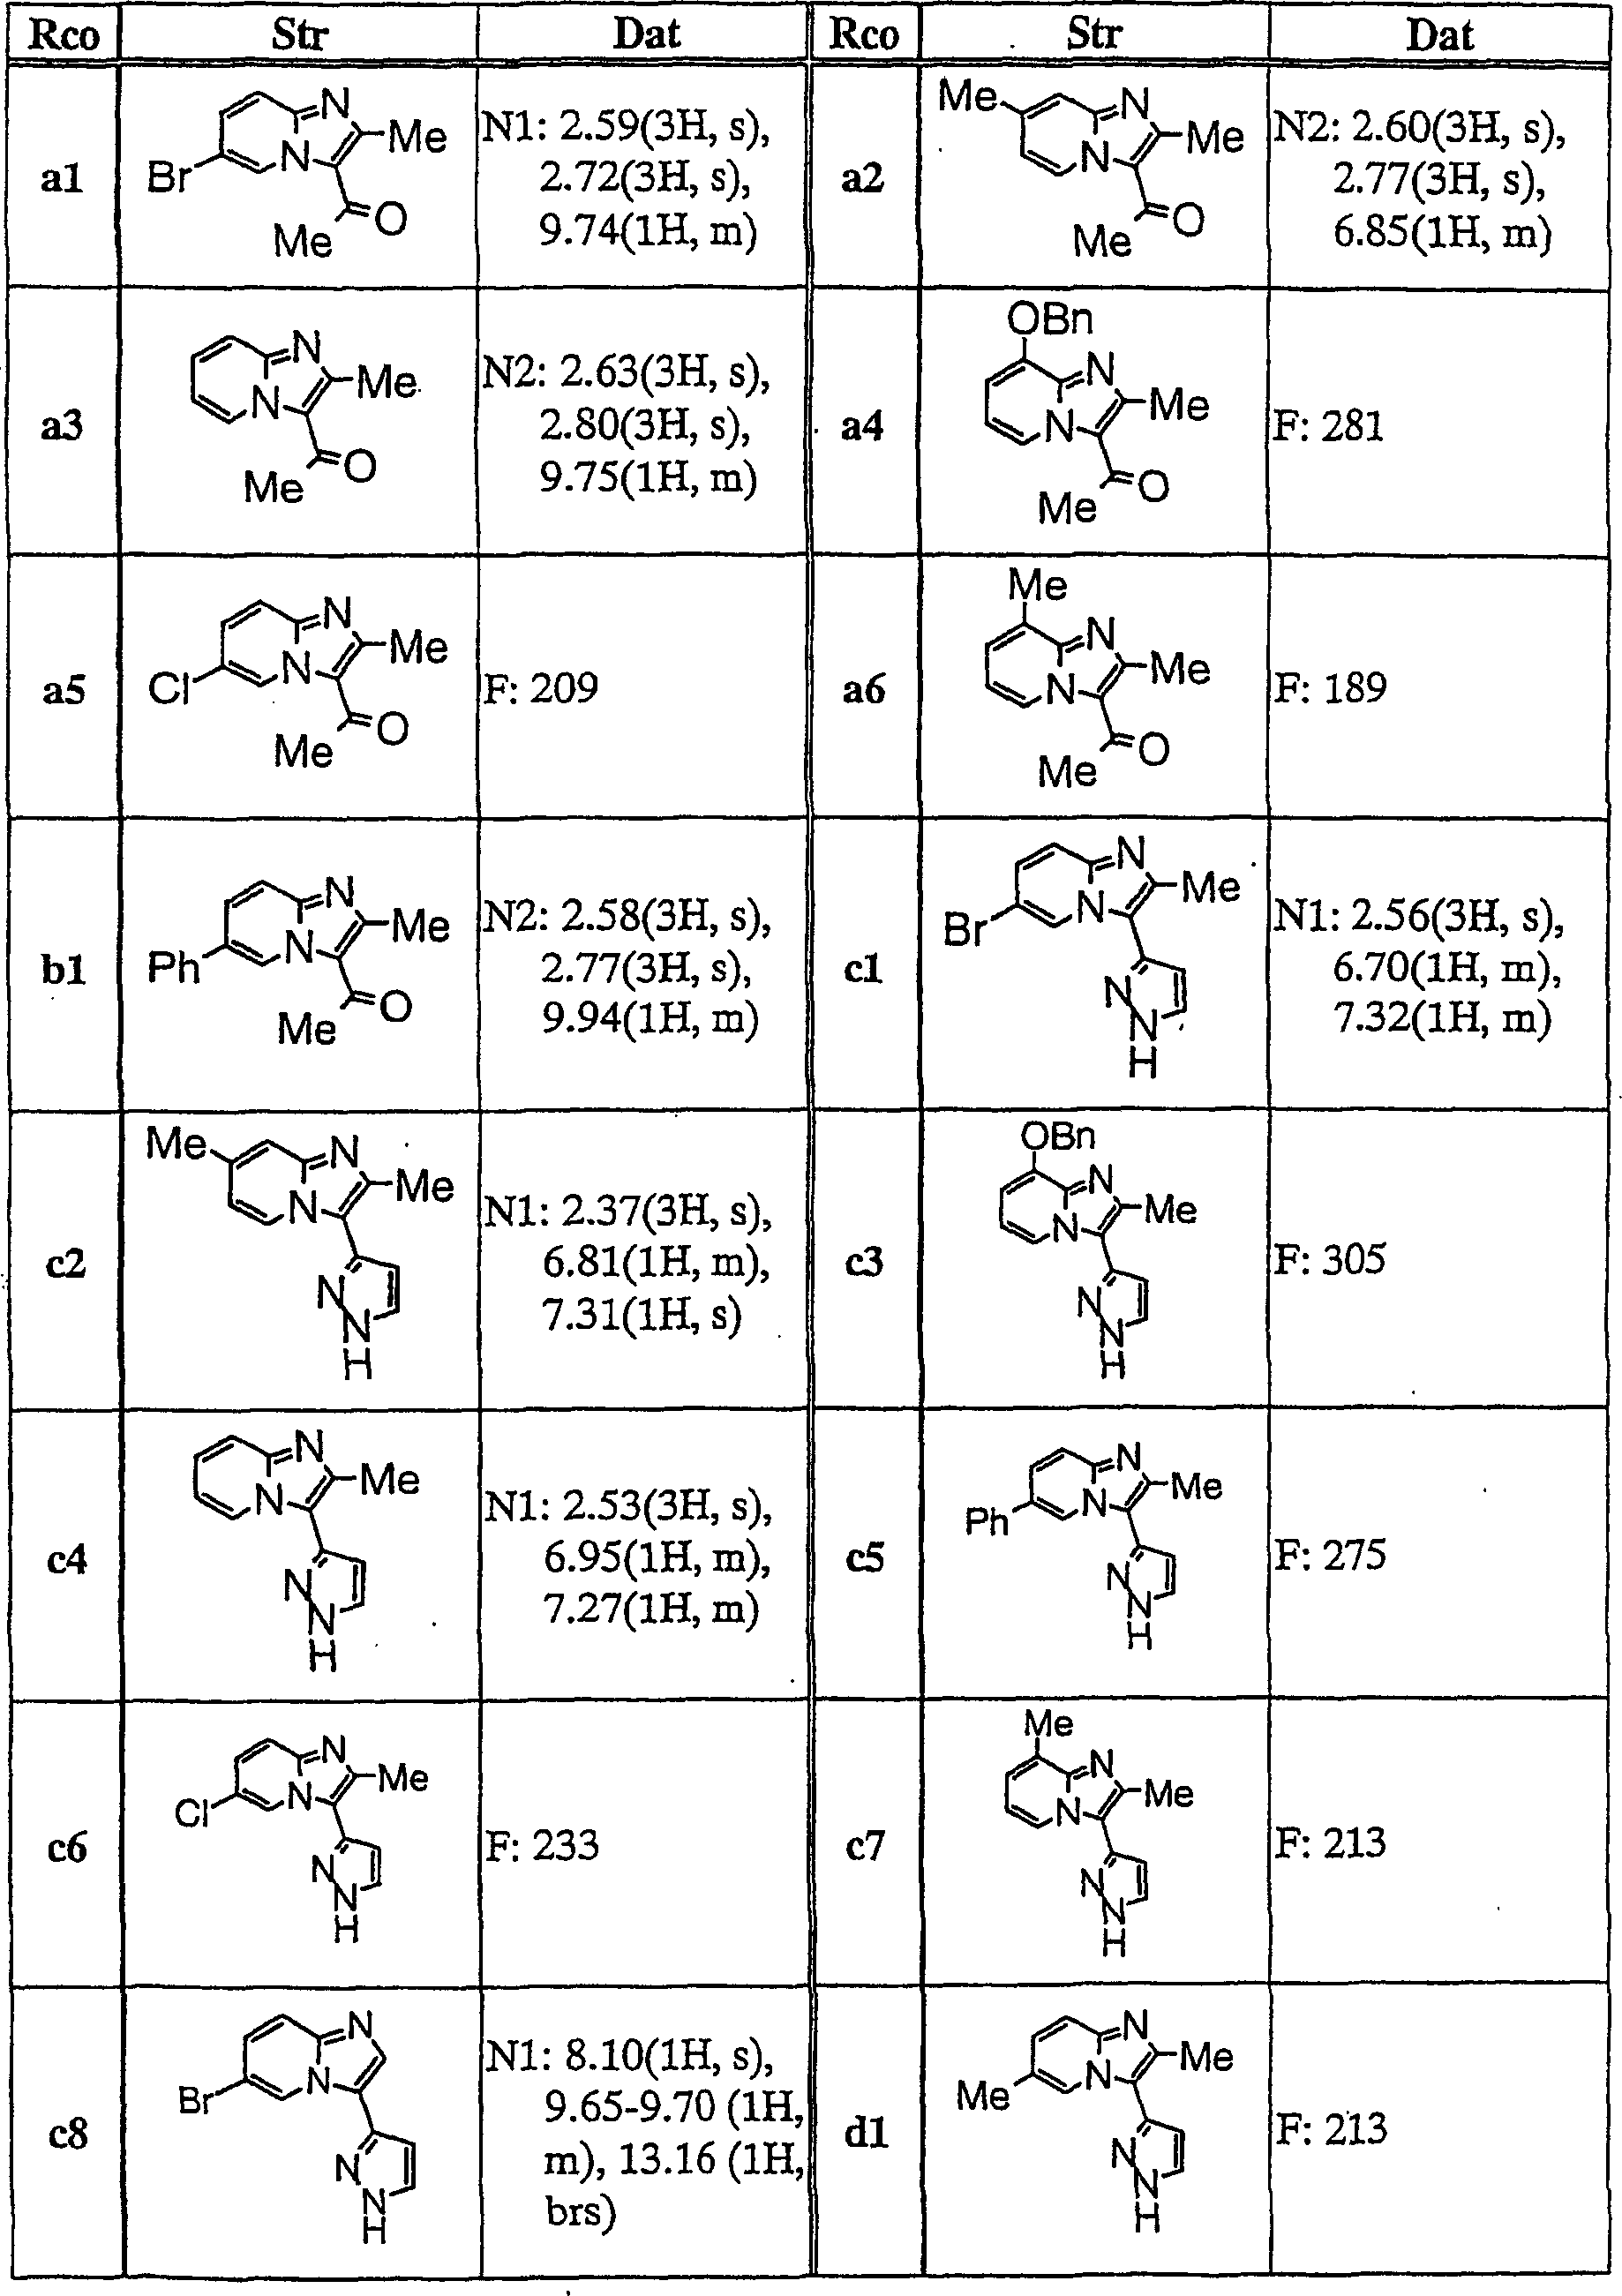 Imidazopyridine derivatives